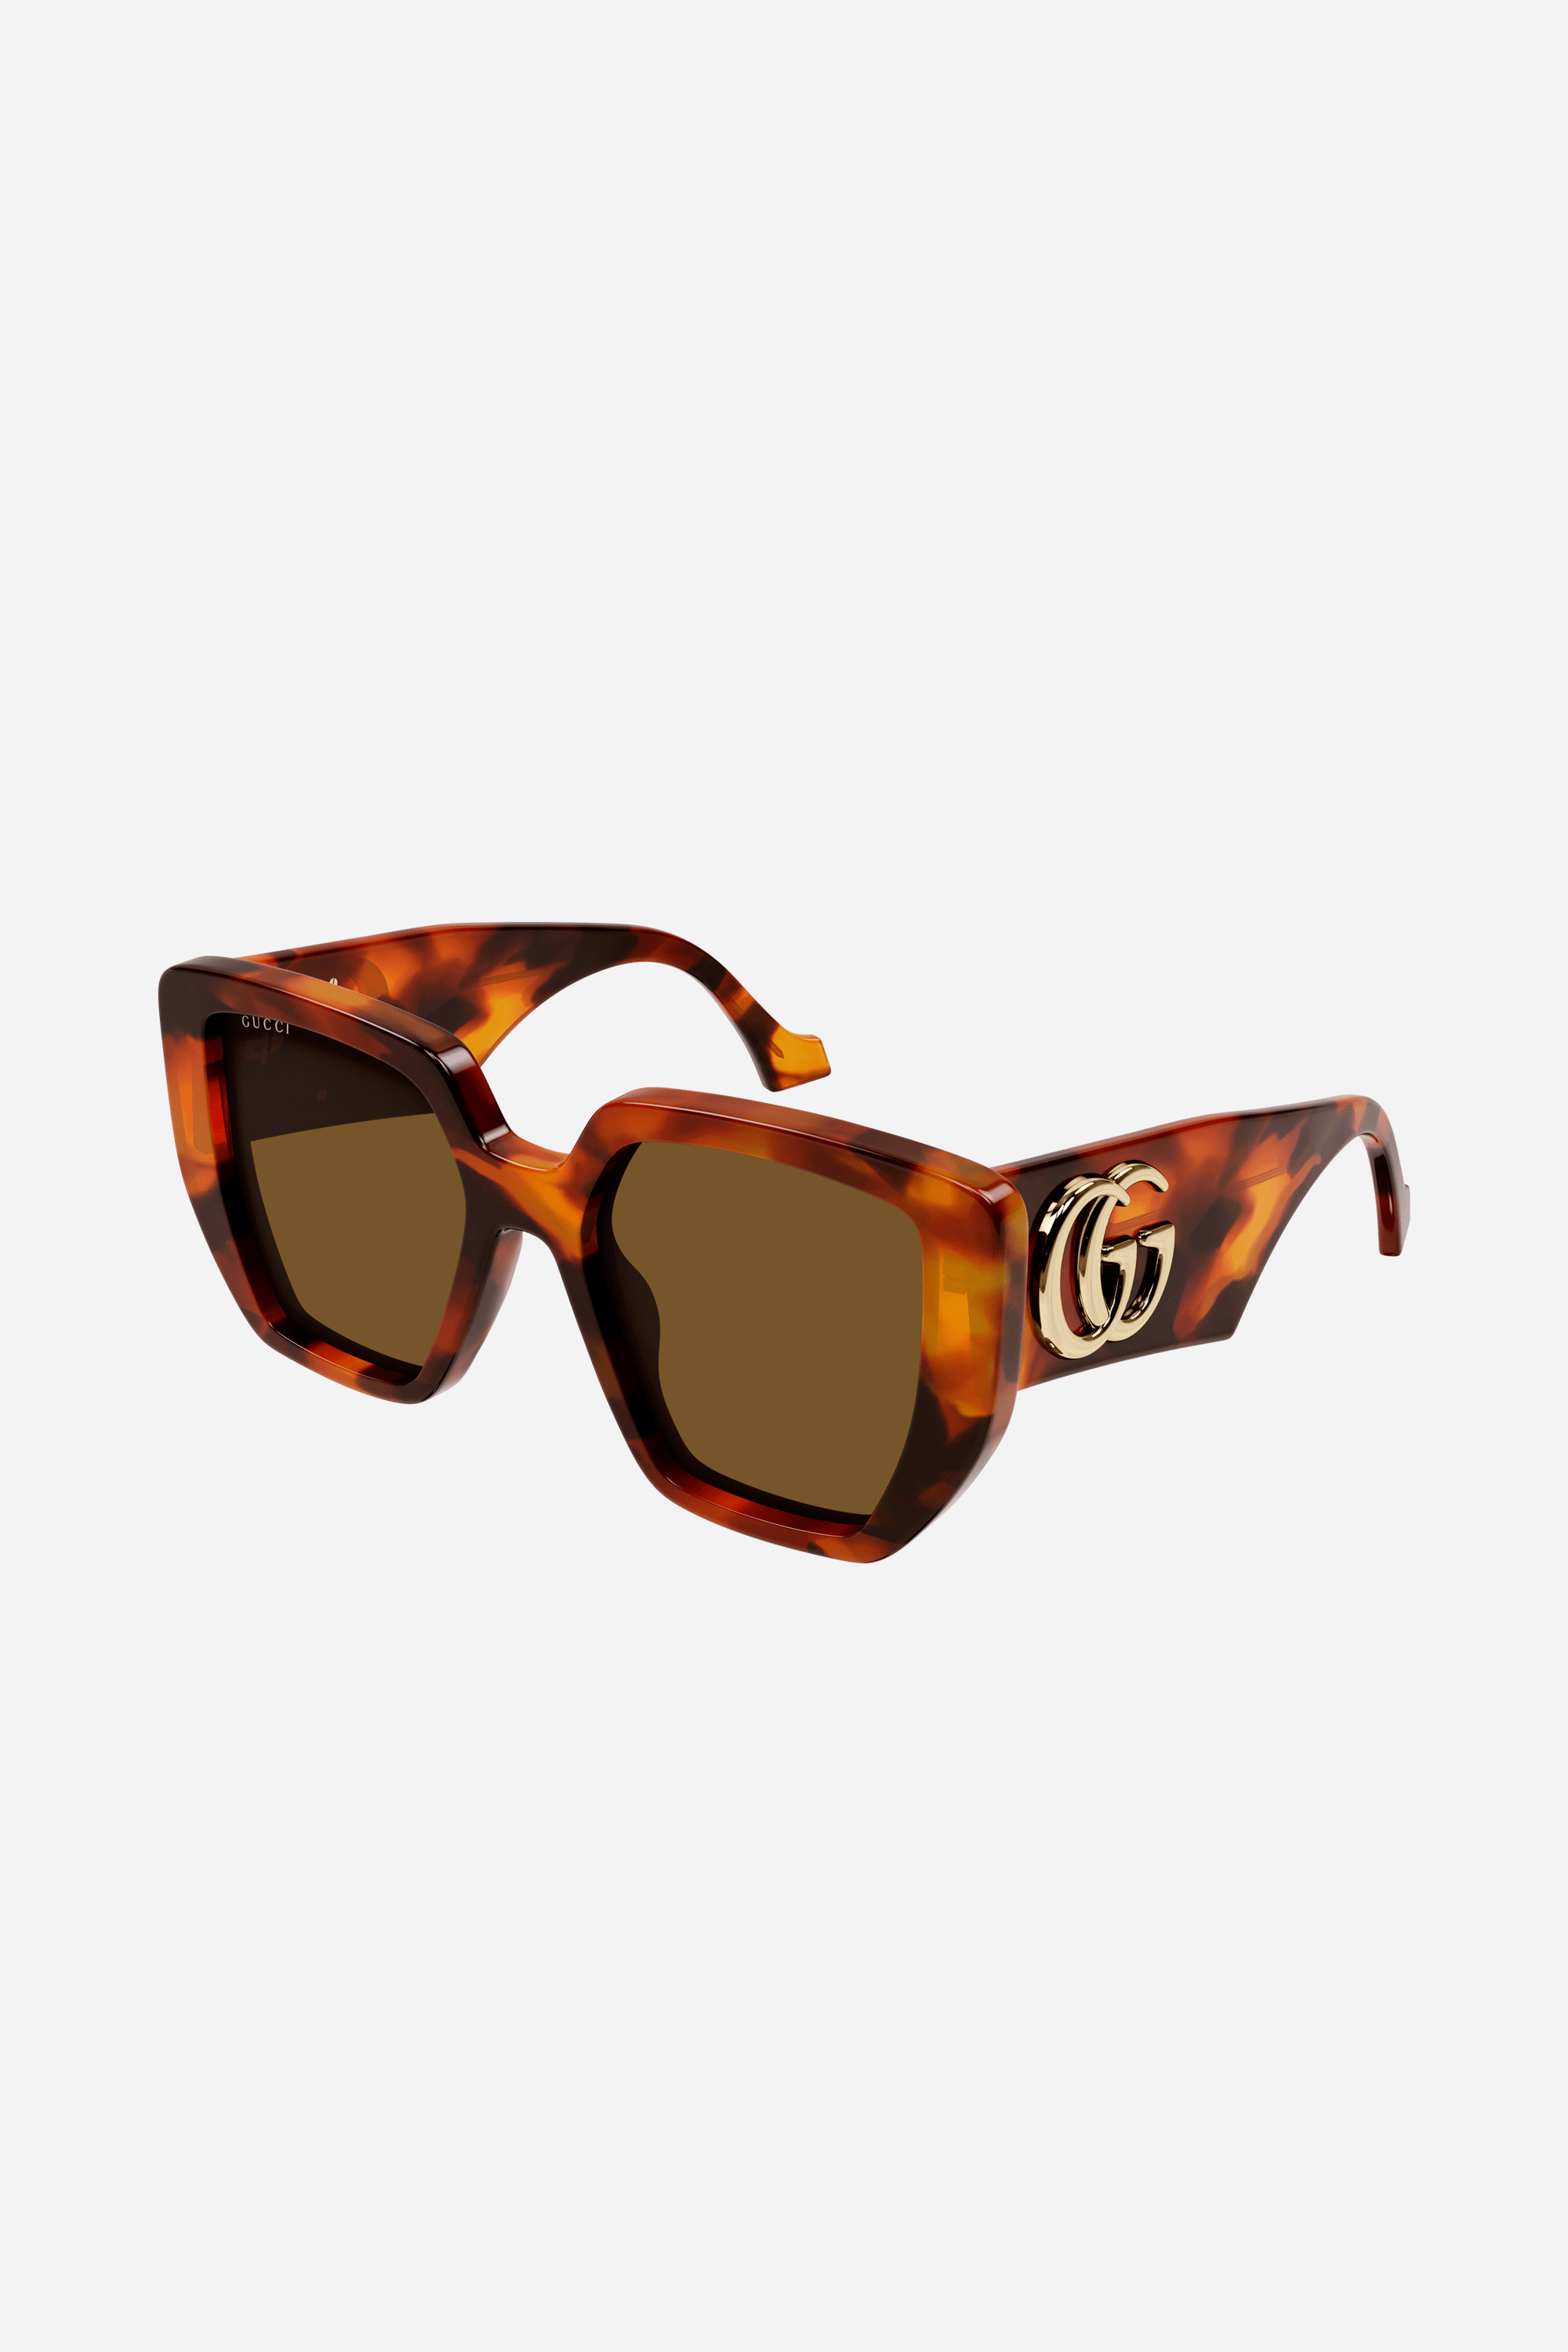 Gucci oversized brown sunglasses with maxi logo - Eyewear Club